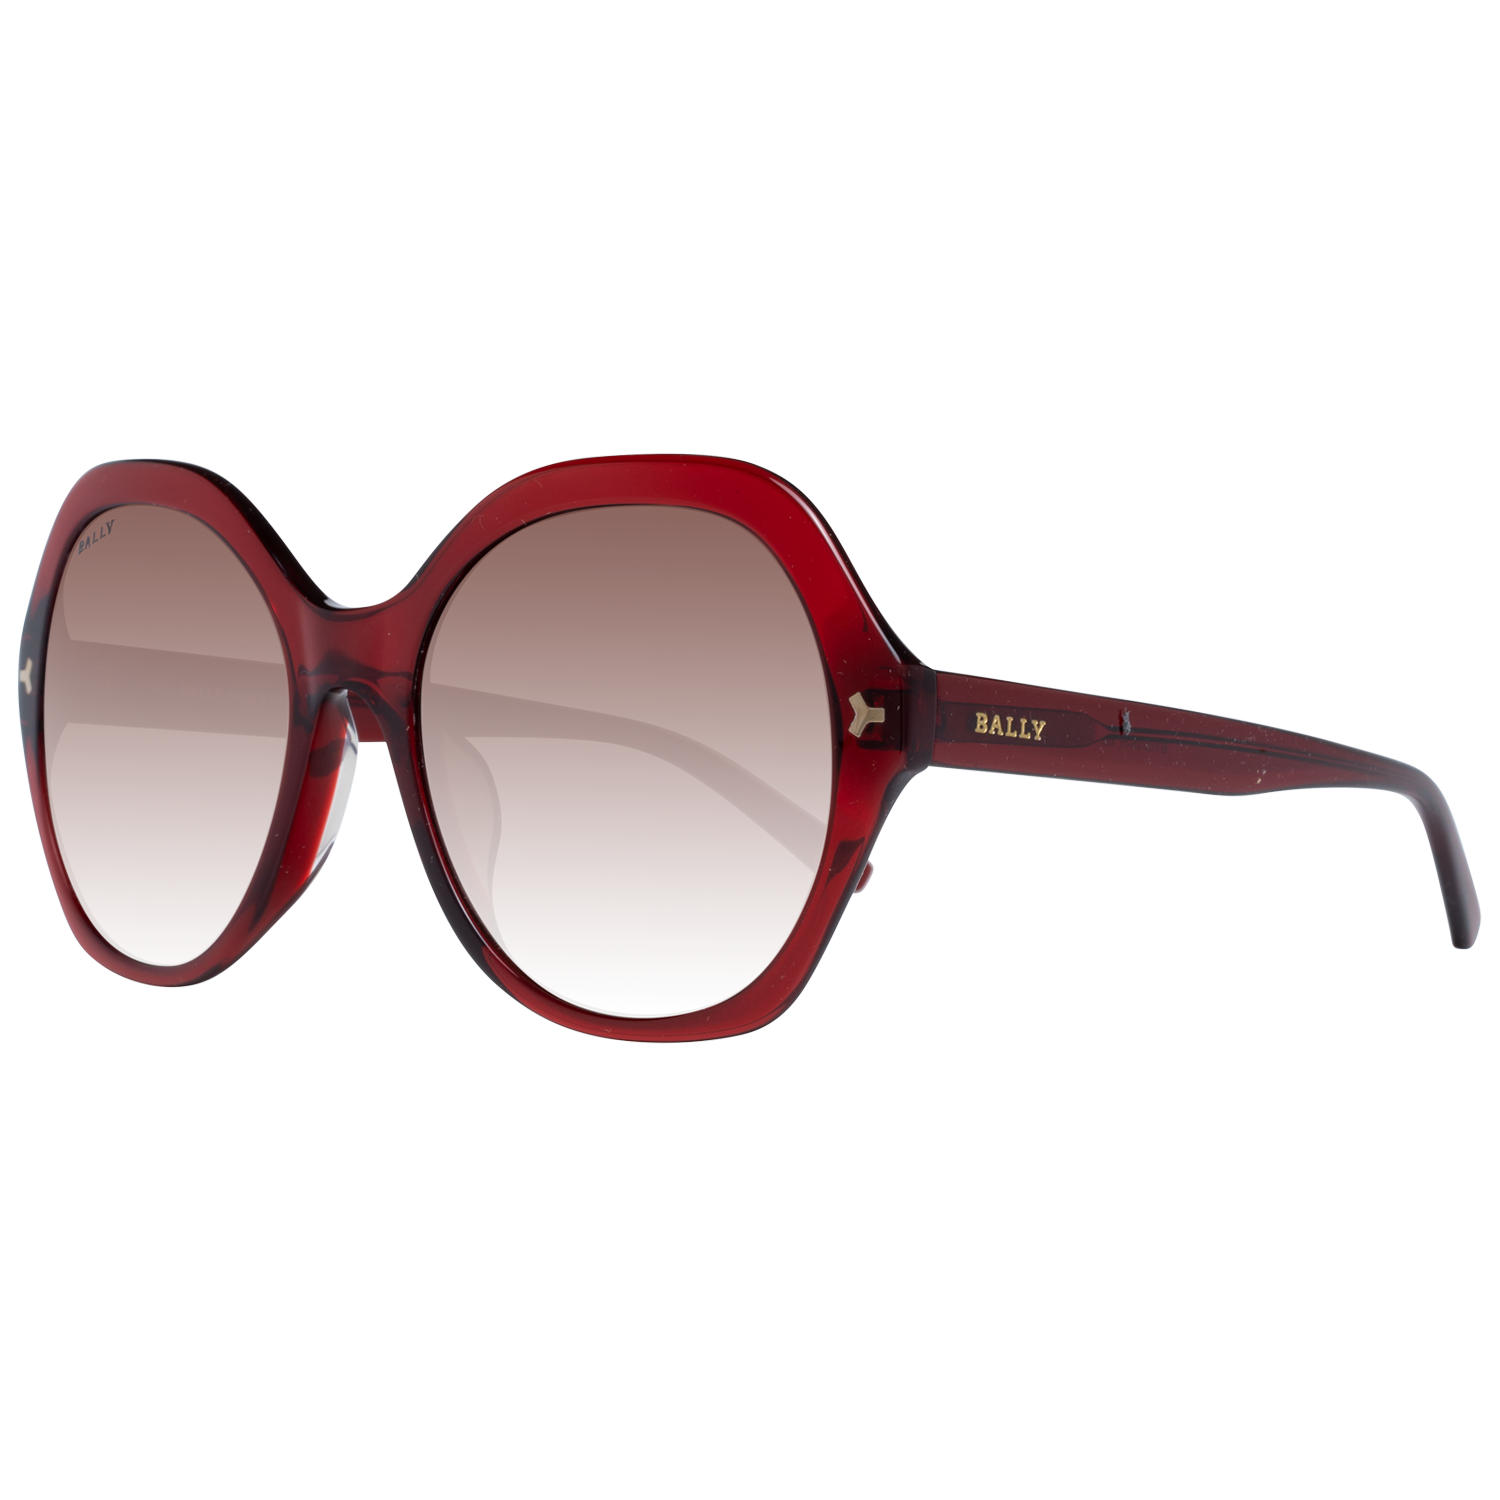 Bally Sunglasses Bally Sunglasses BY0035-H 66F 55 Eyeglasses Eyewear UK USA Australia 